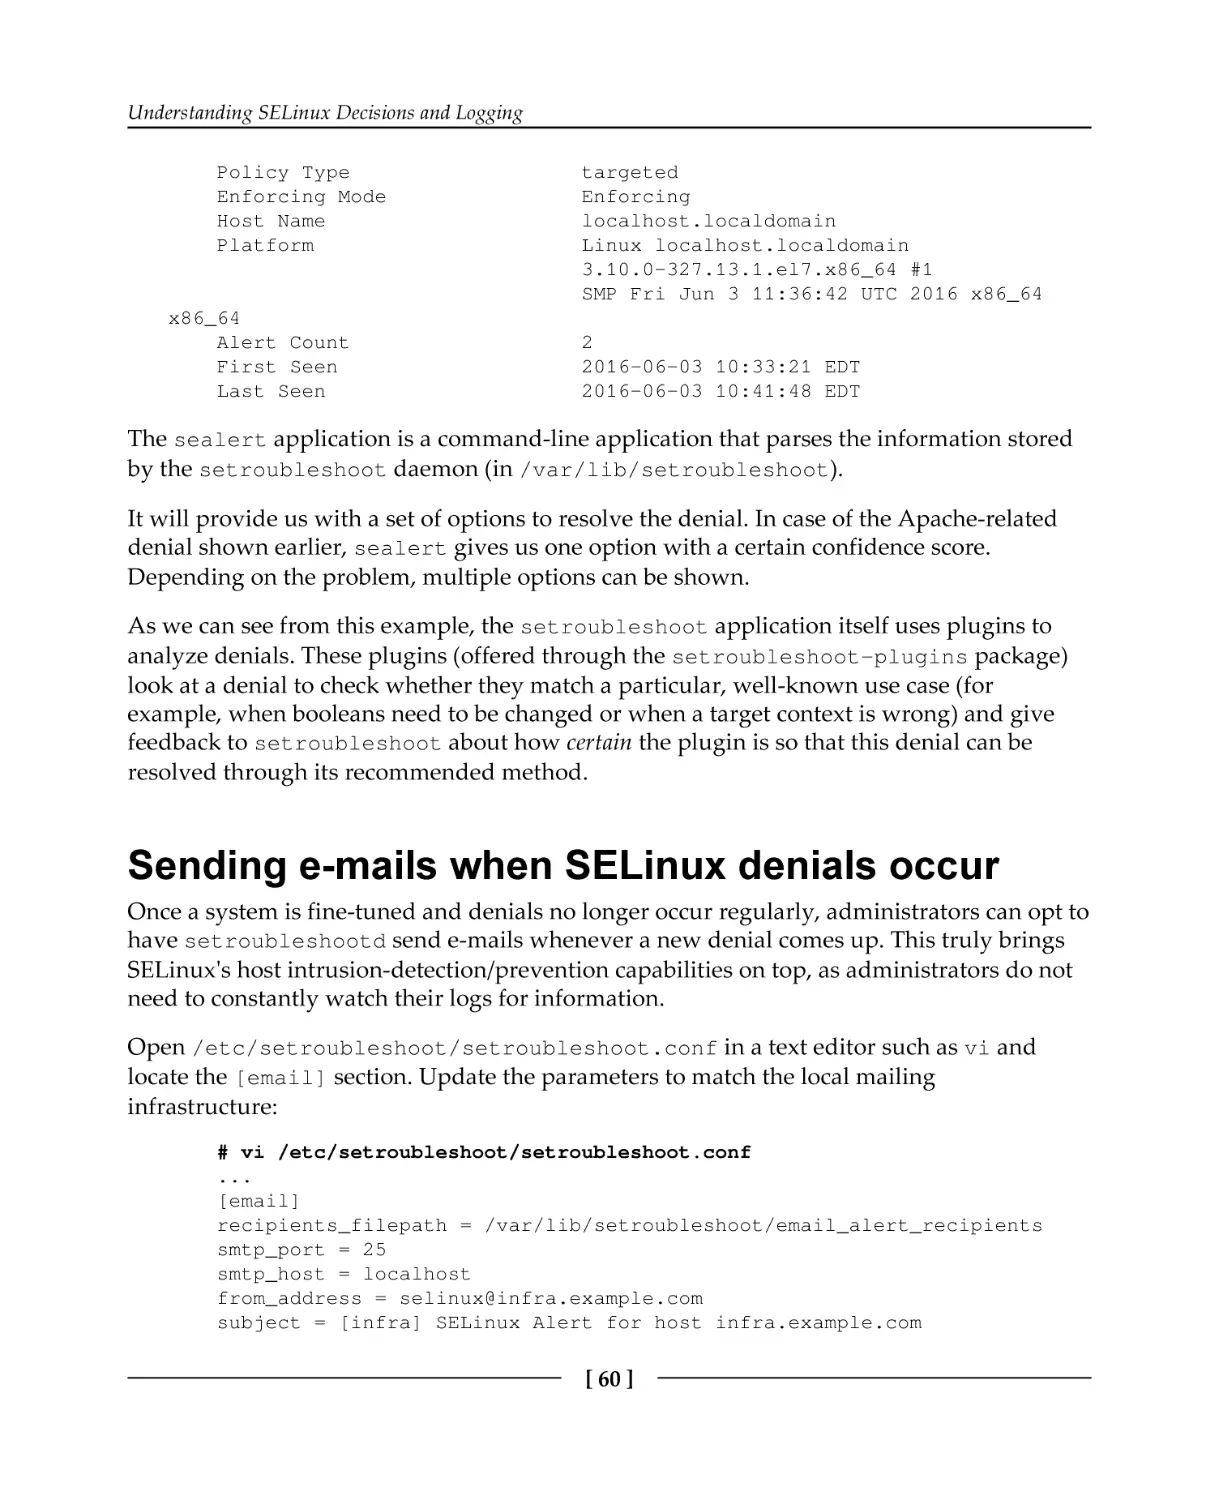 Sending e-mails when SELinux denials occur